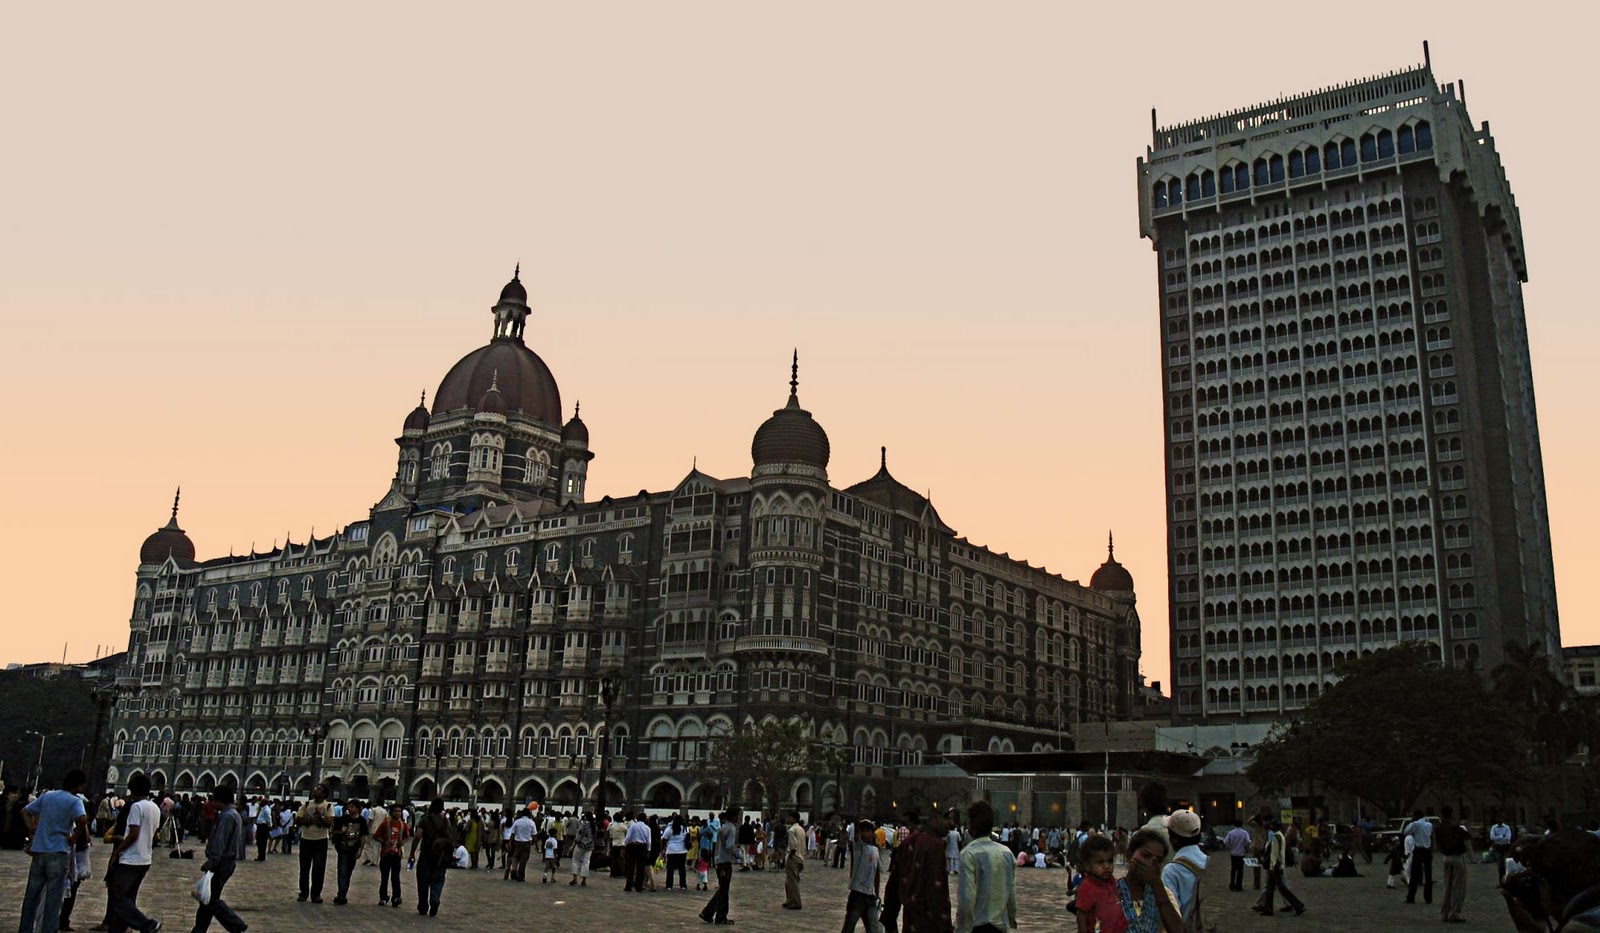 Stock Pictures: The Taj Mahal Hotel in Mumbai